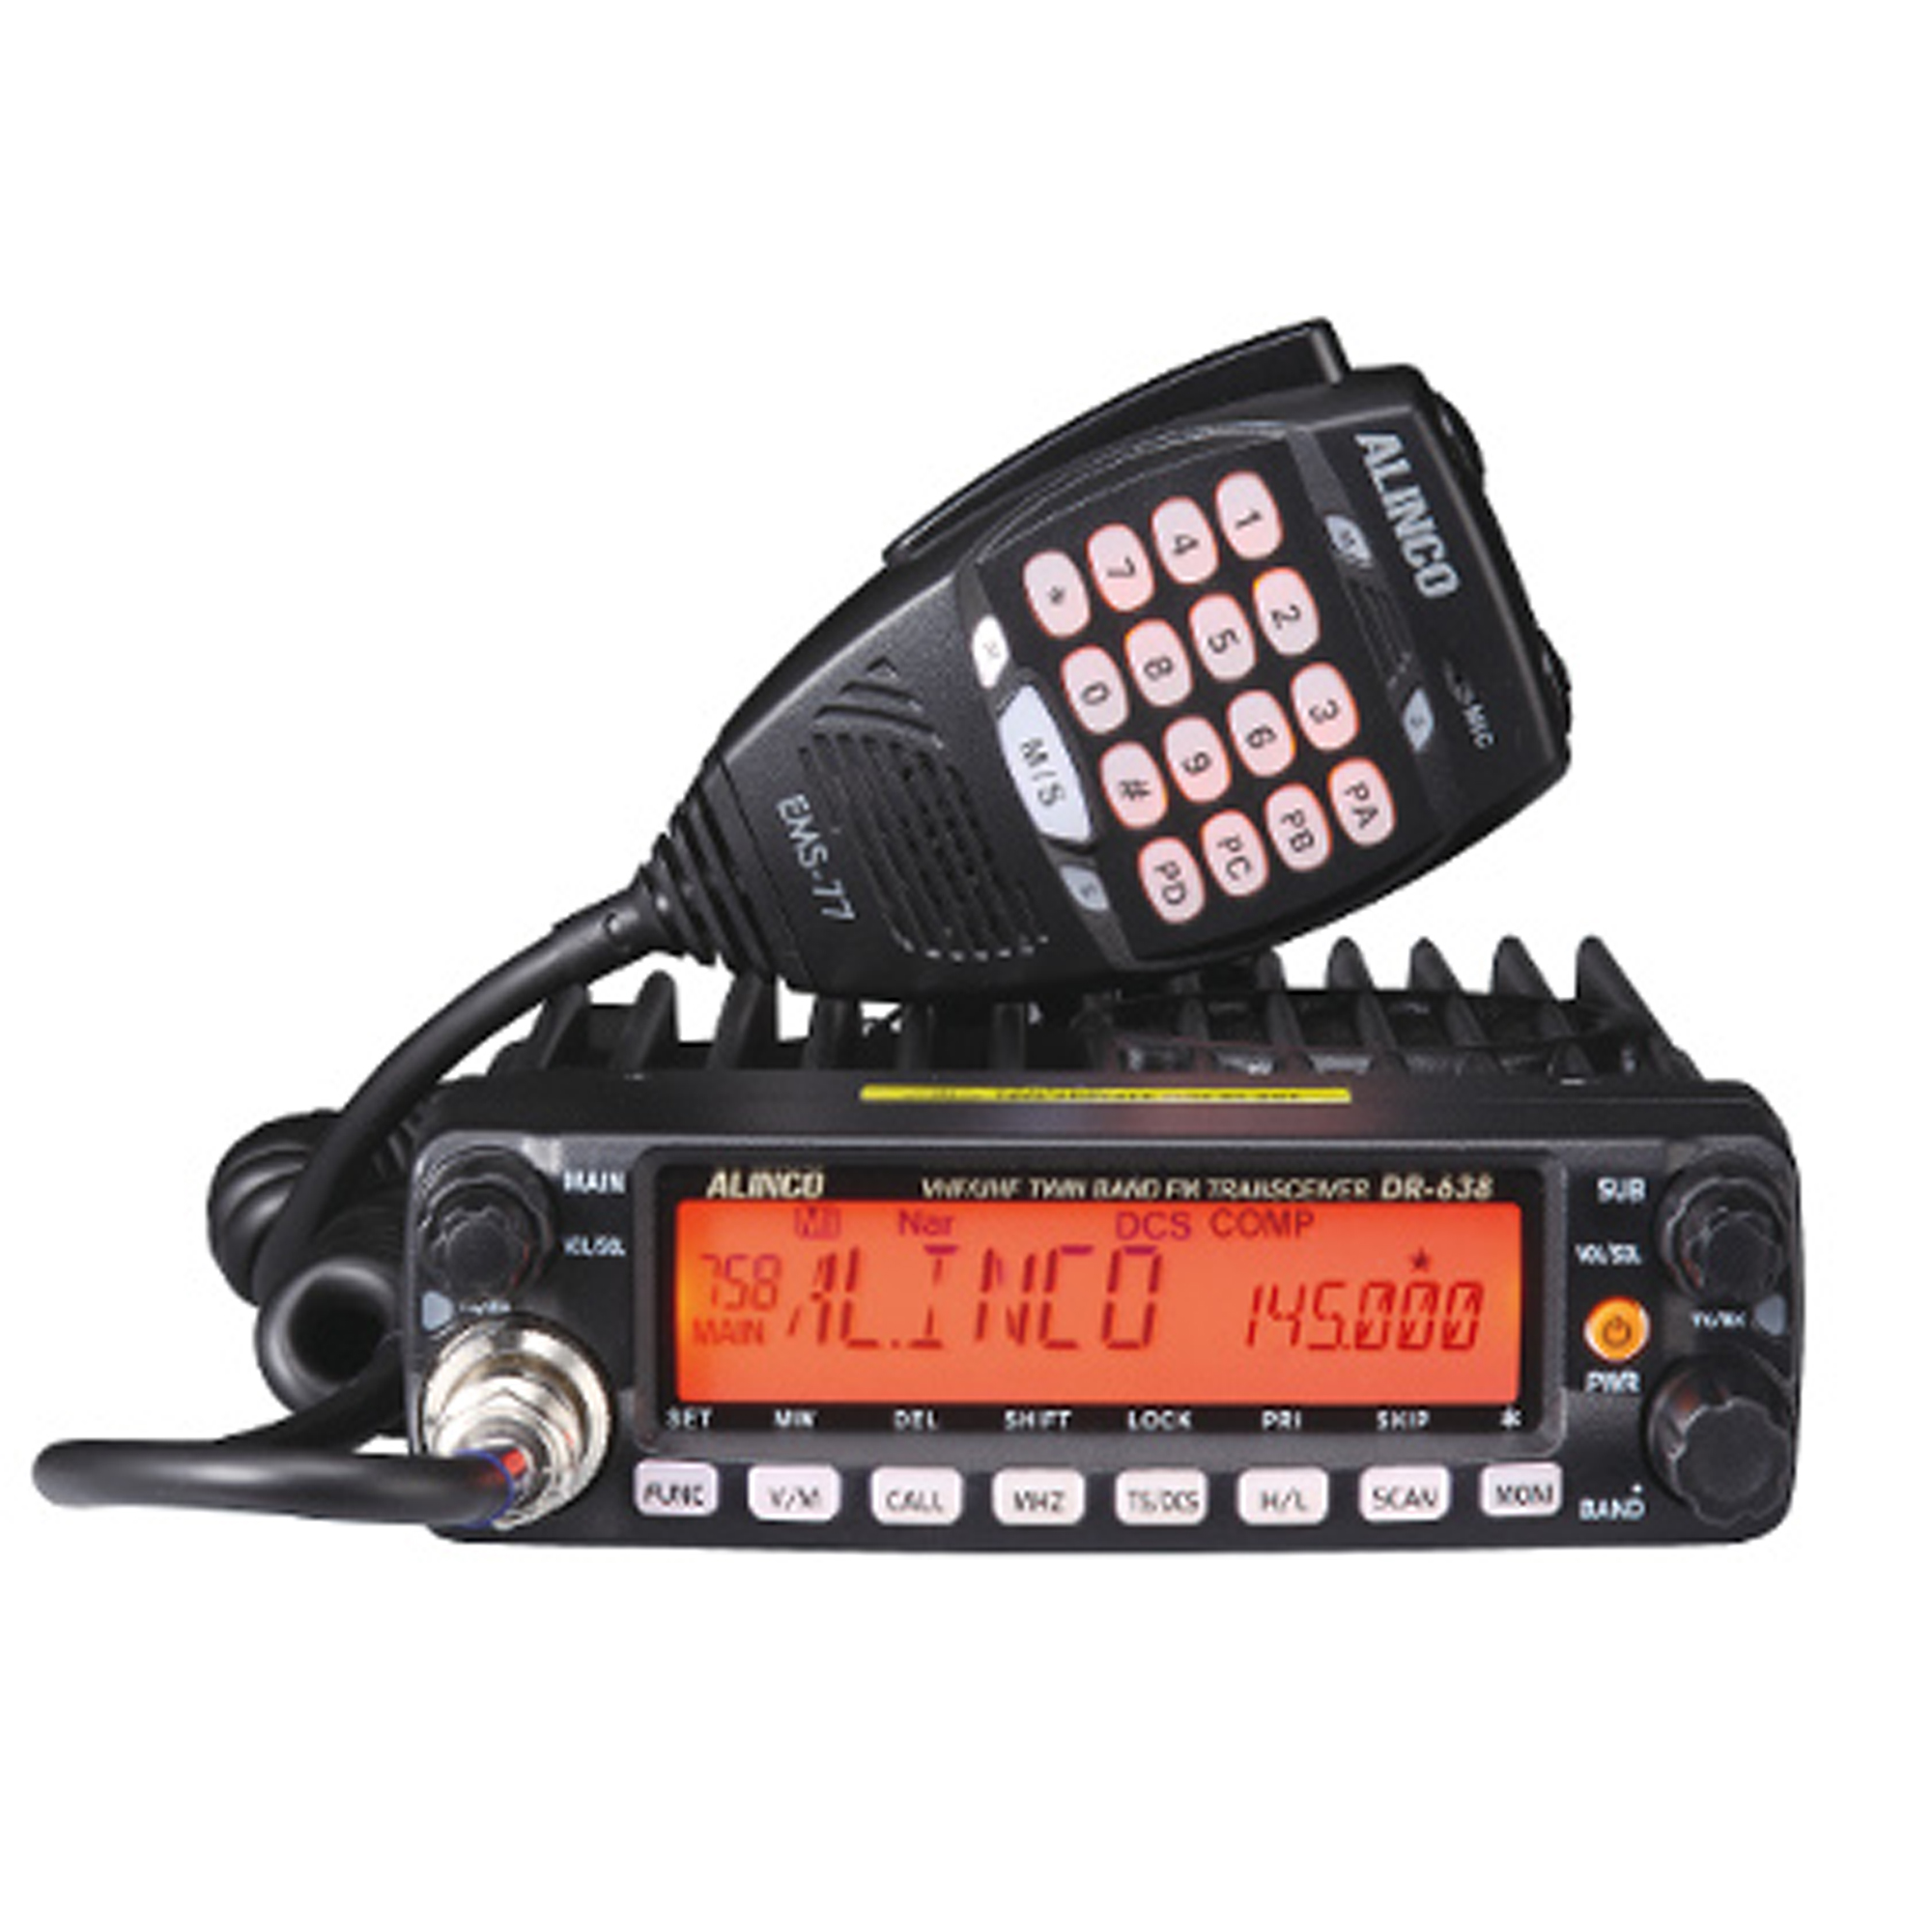 Statie radio VHF/UHF PNI Alinco DR-638HE dual band 144-146MHz/430-440Mhz pentru radioamatori image